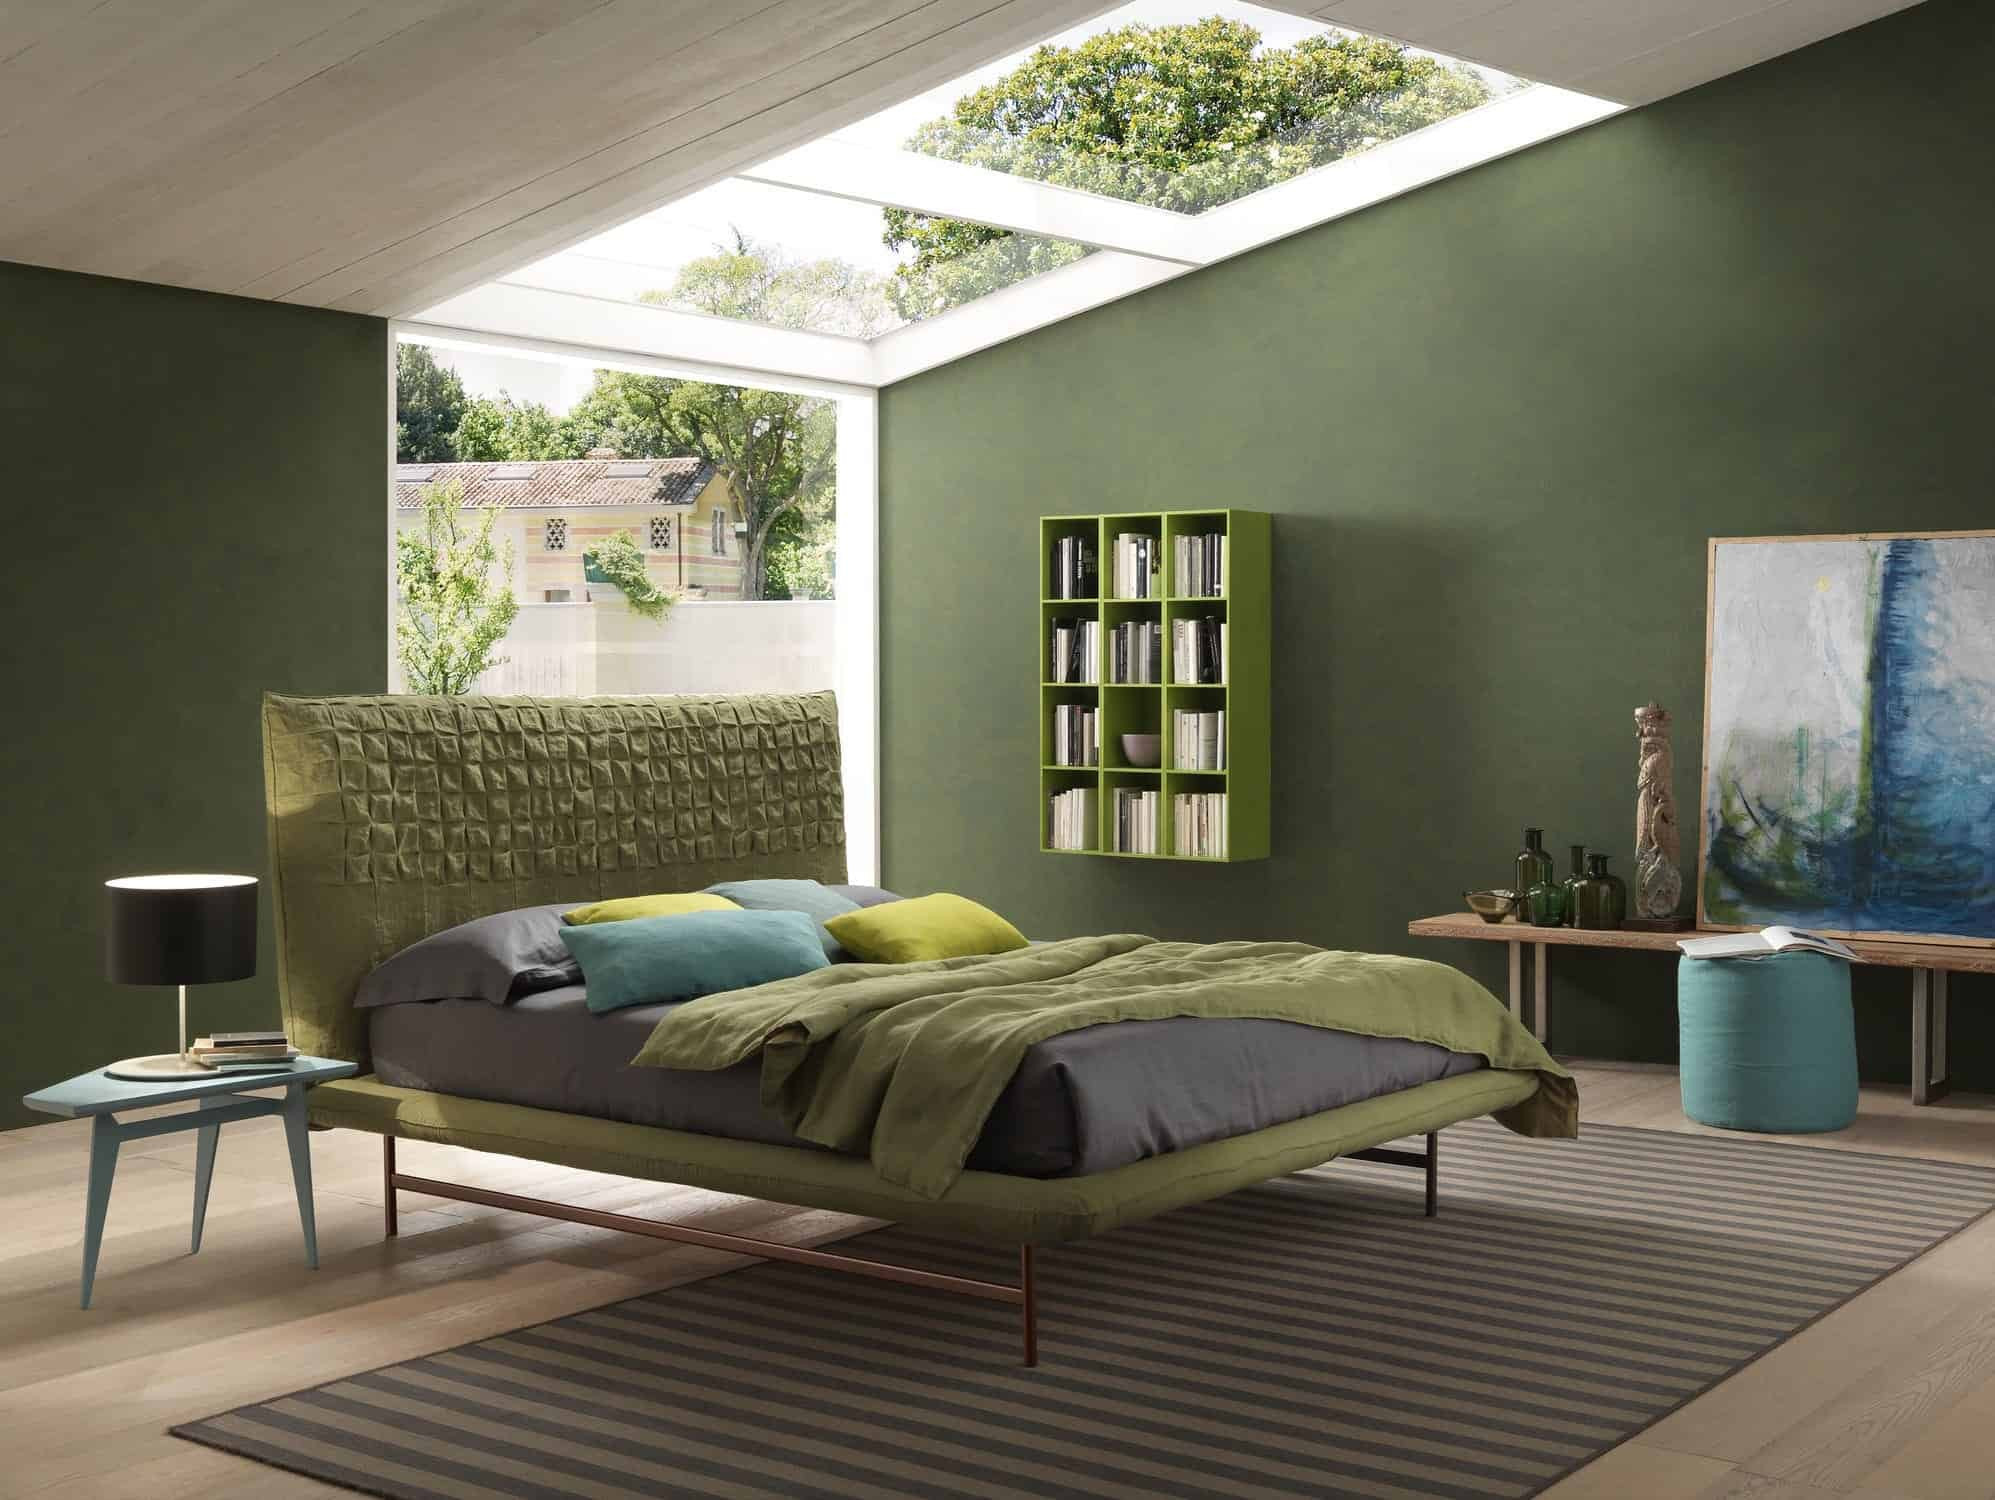 Bedroom Green Walls
 50 Modern Bedroom Design Ideas